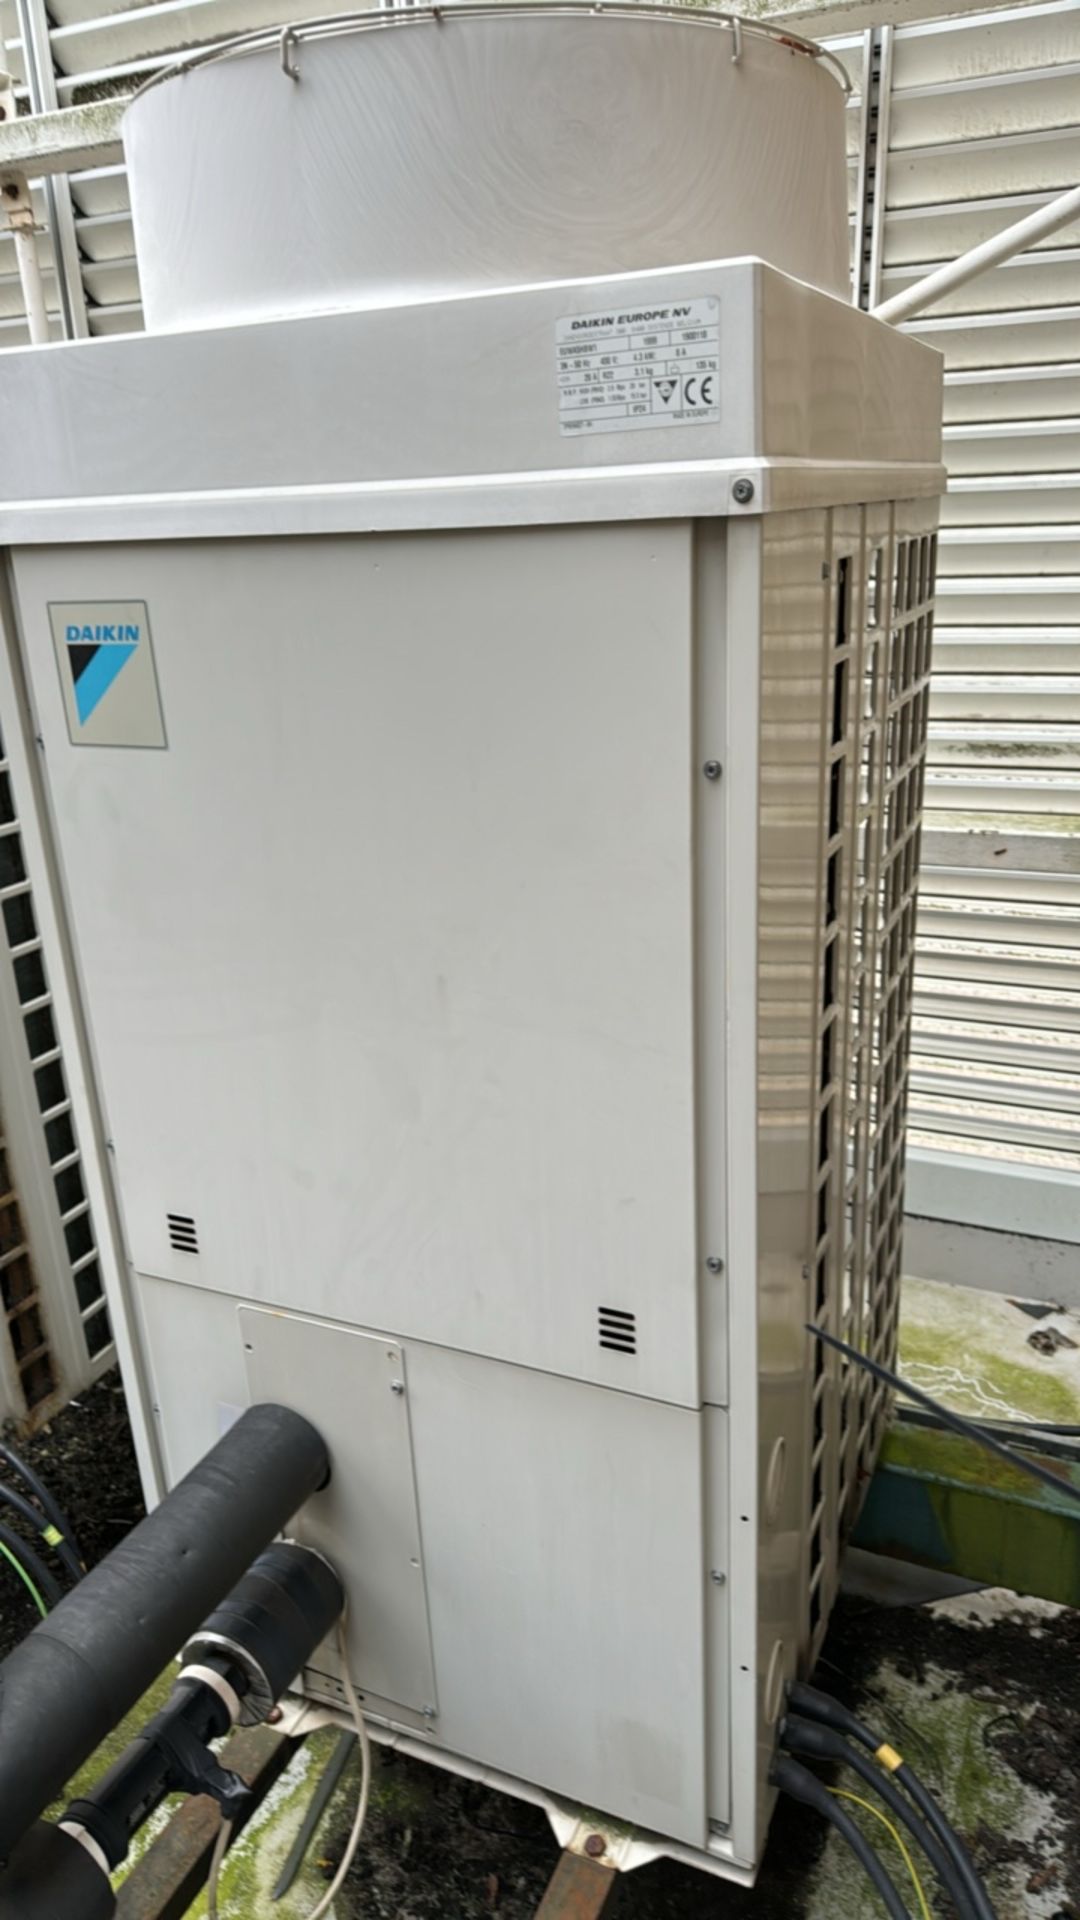 Daikin Europe Air Conditioner - Image 3 of 4